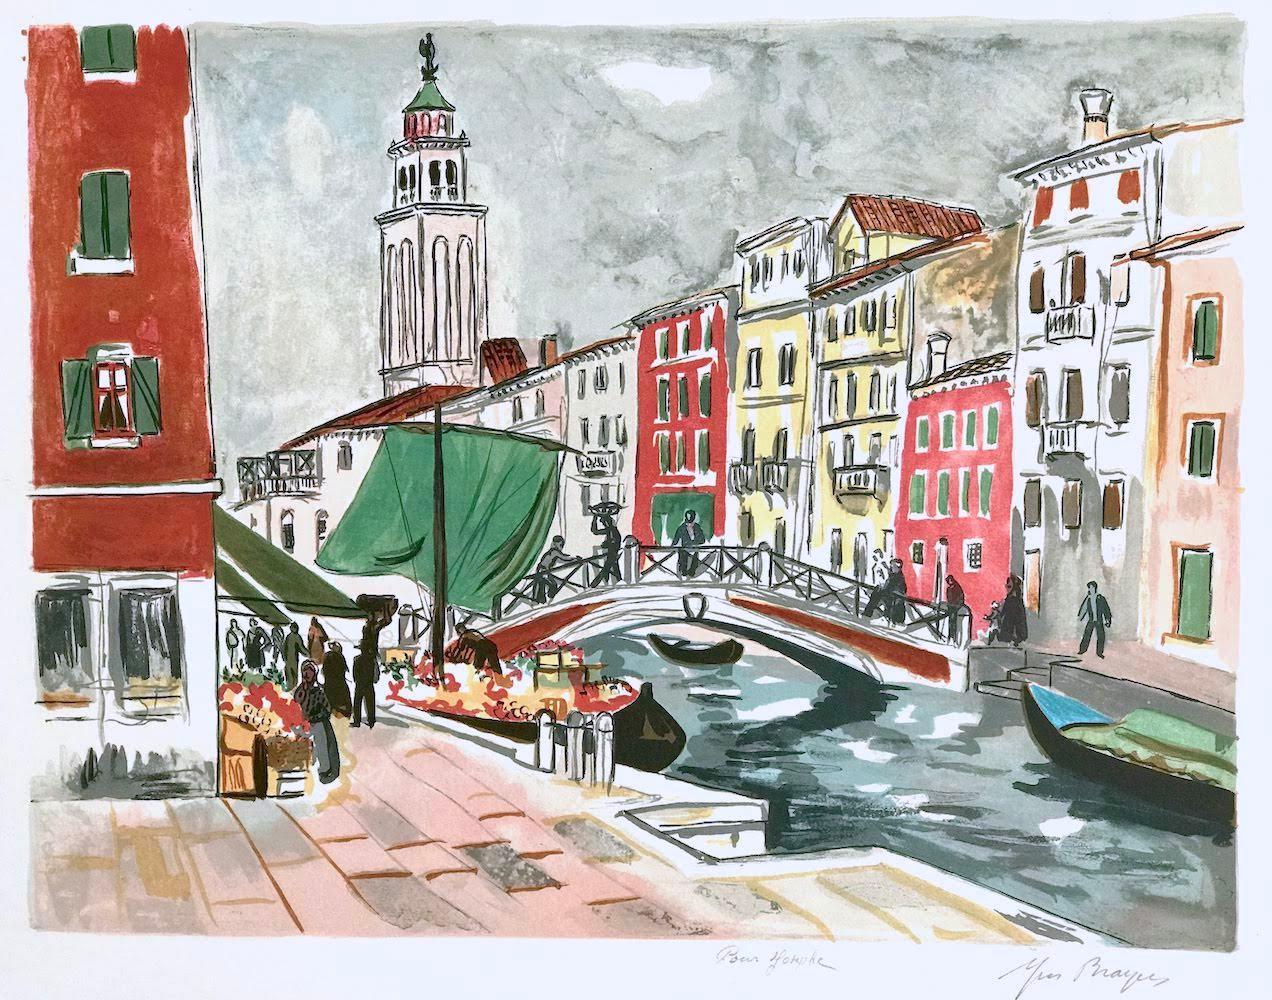 Yves Brayer Figurative Print - VENICE: MARCHÉ AUX FLEURS Signed Lithograph, Italian Market Scene, Venice Canal 